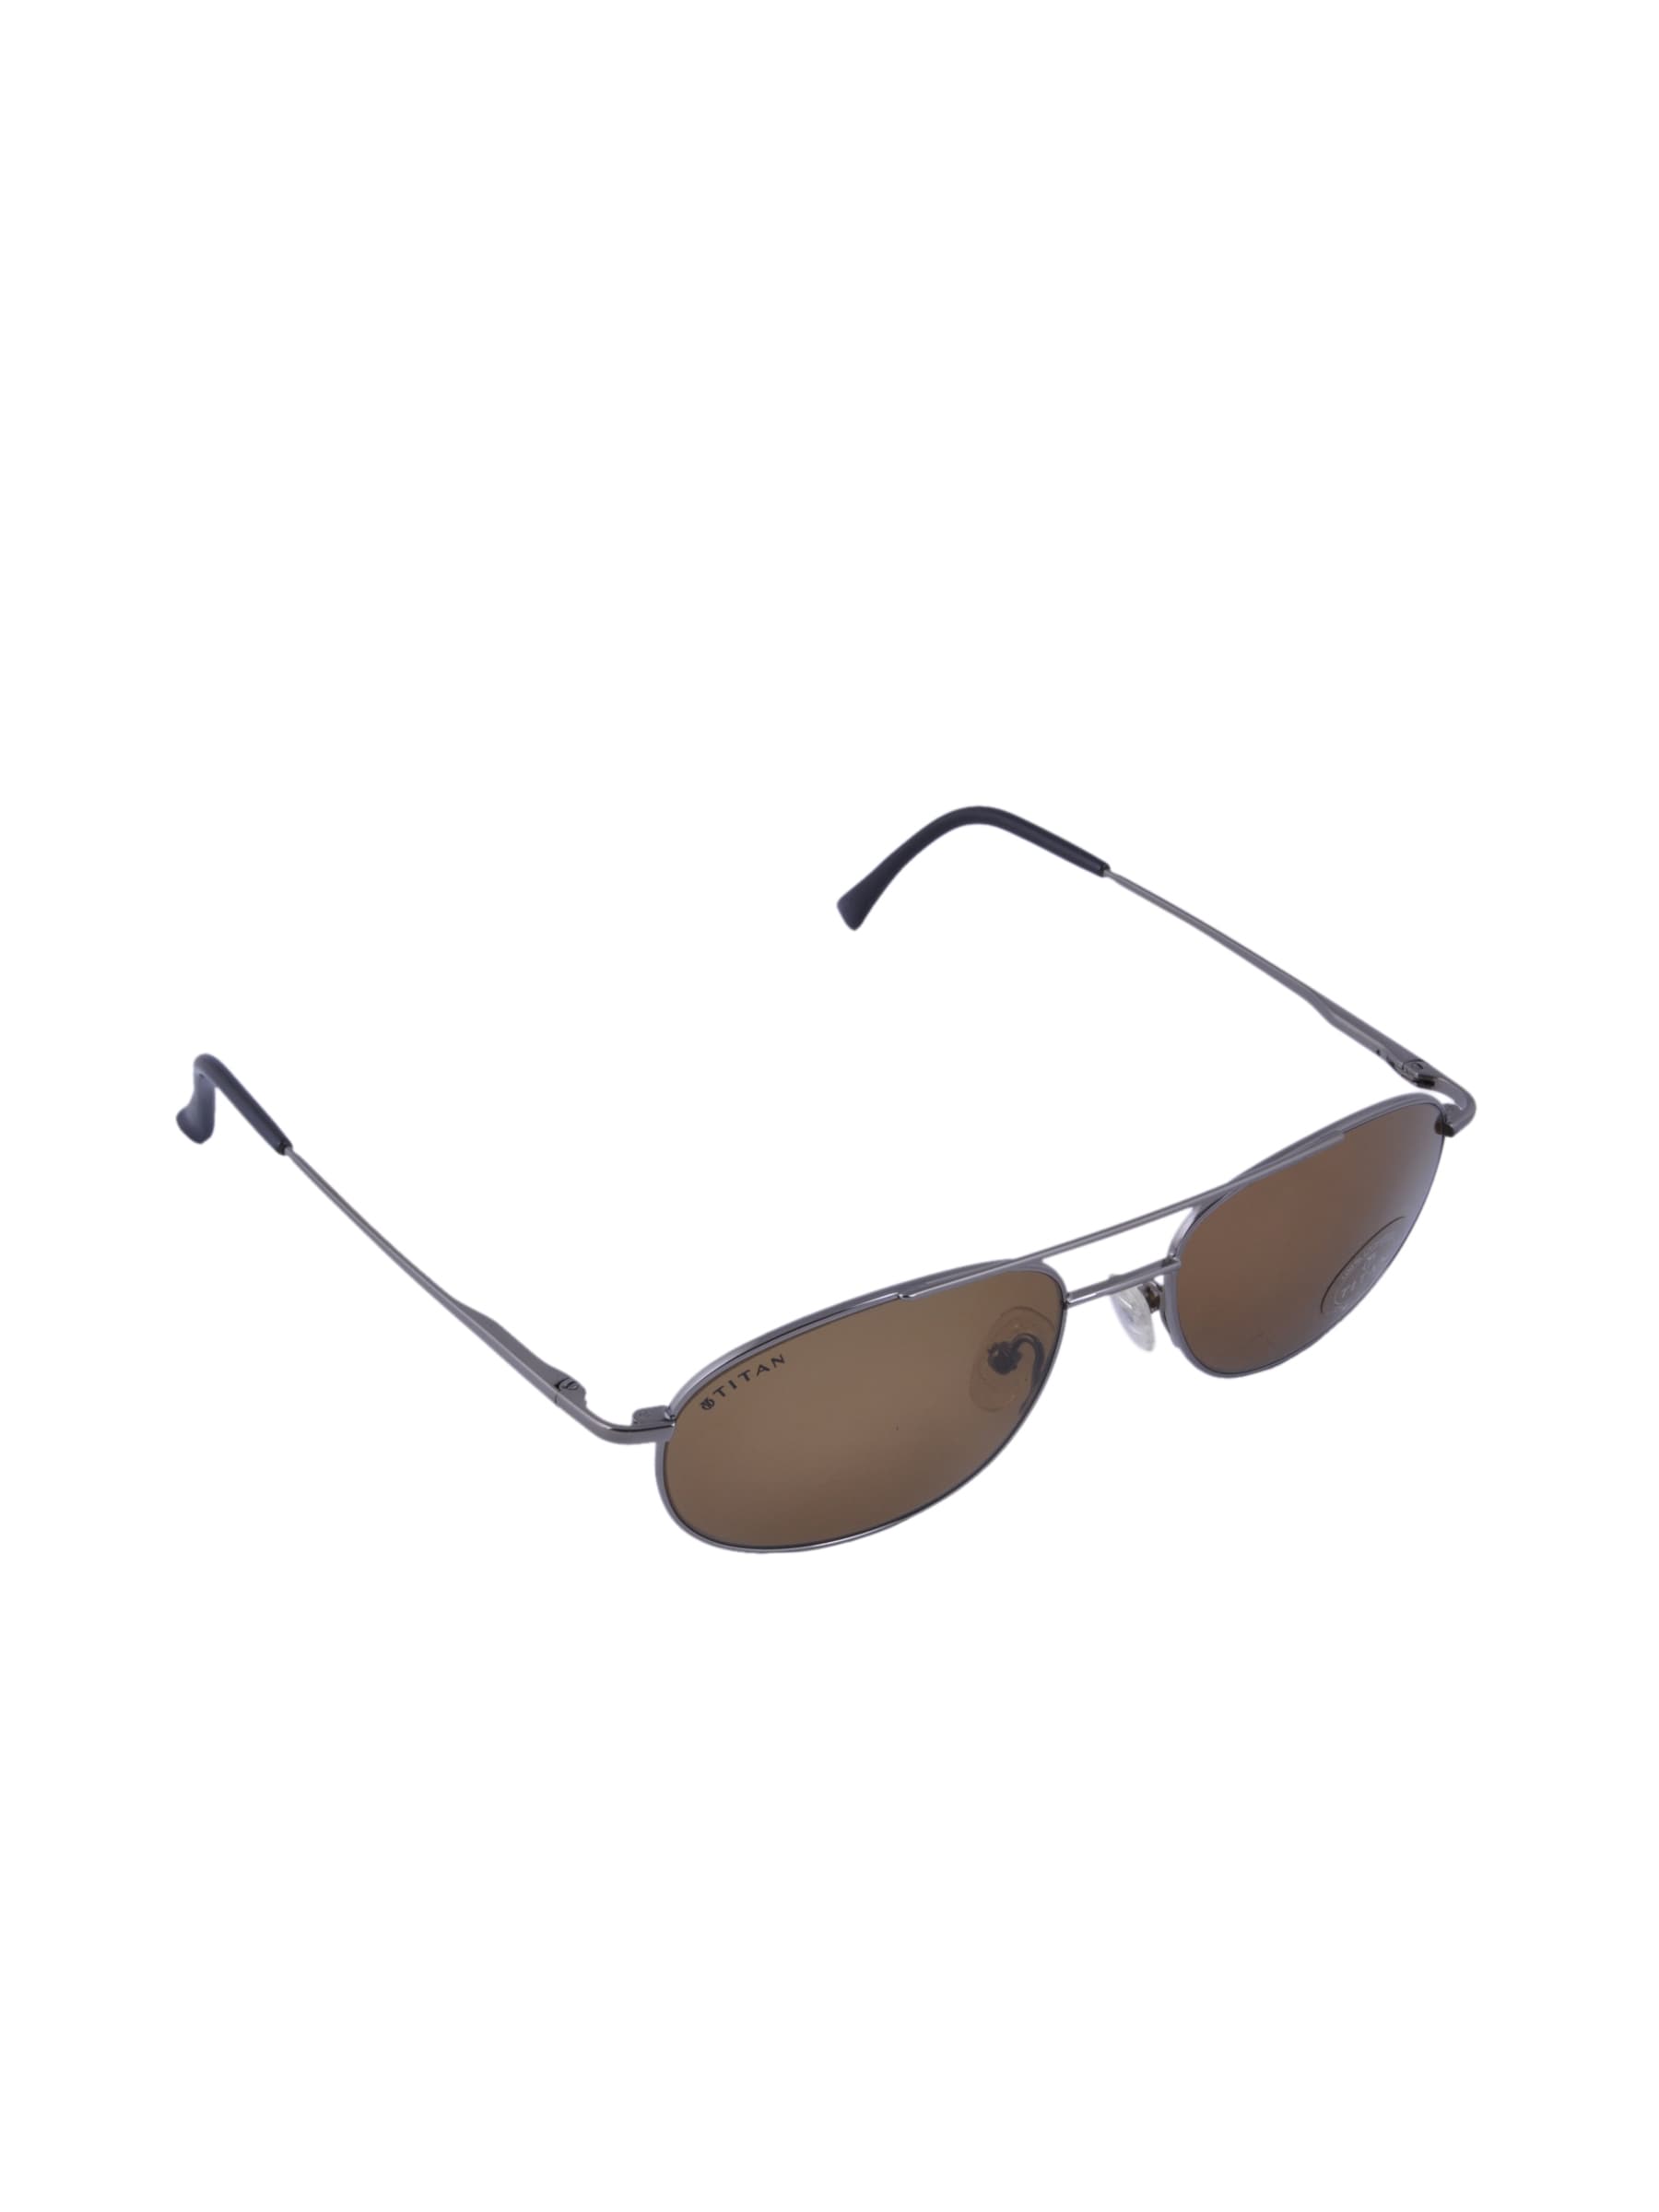 Fastrack Unisex Brown Sunglasses